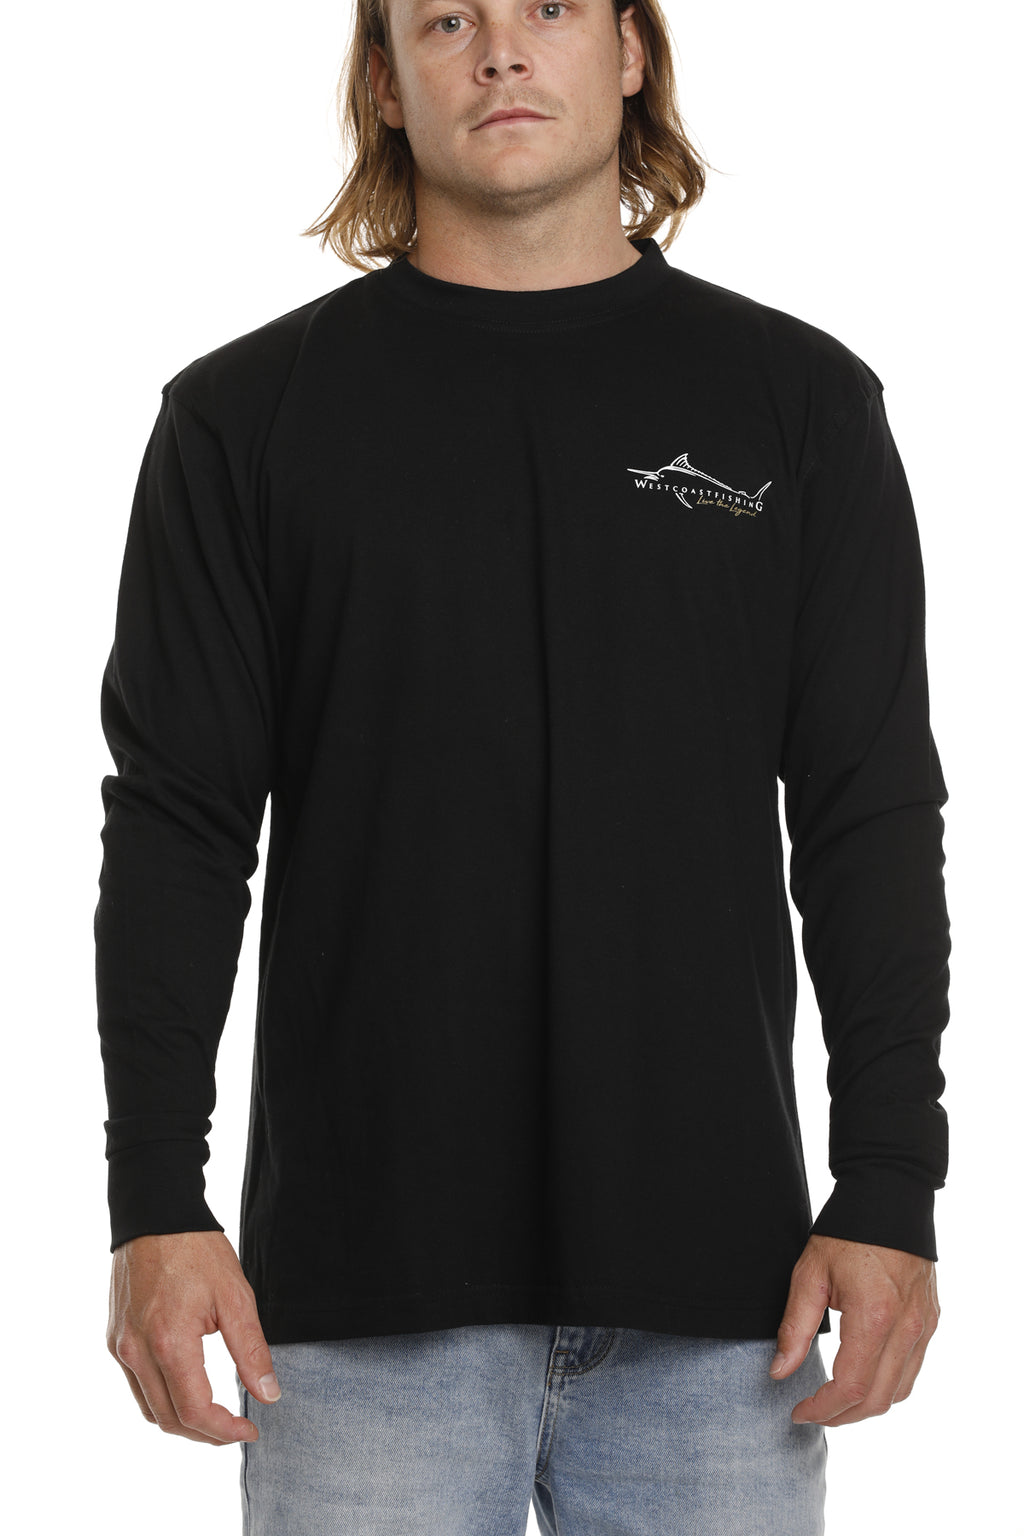 The Sport Fisher Classic Long Sleeve Fishing Shirt 